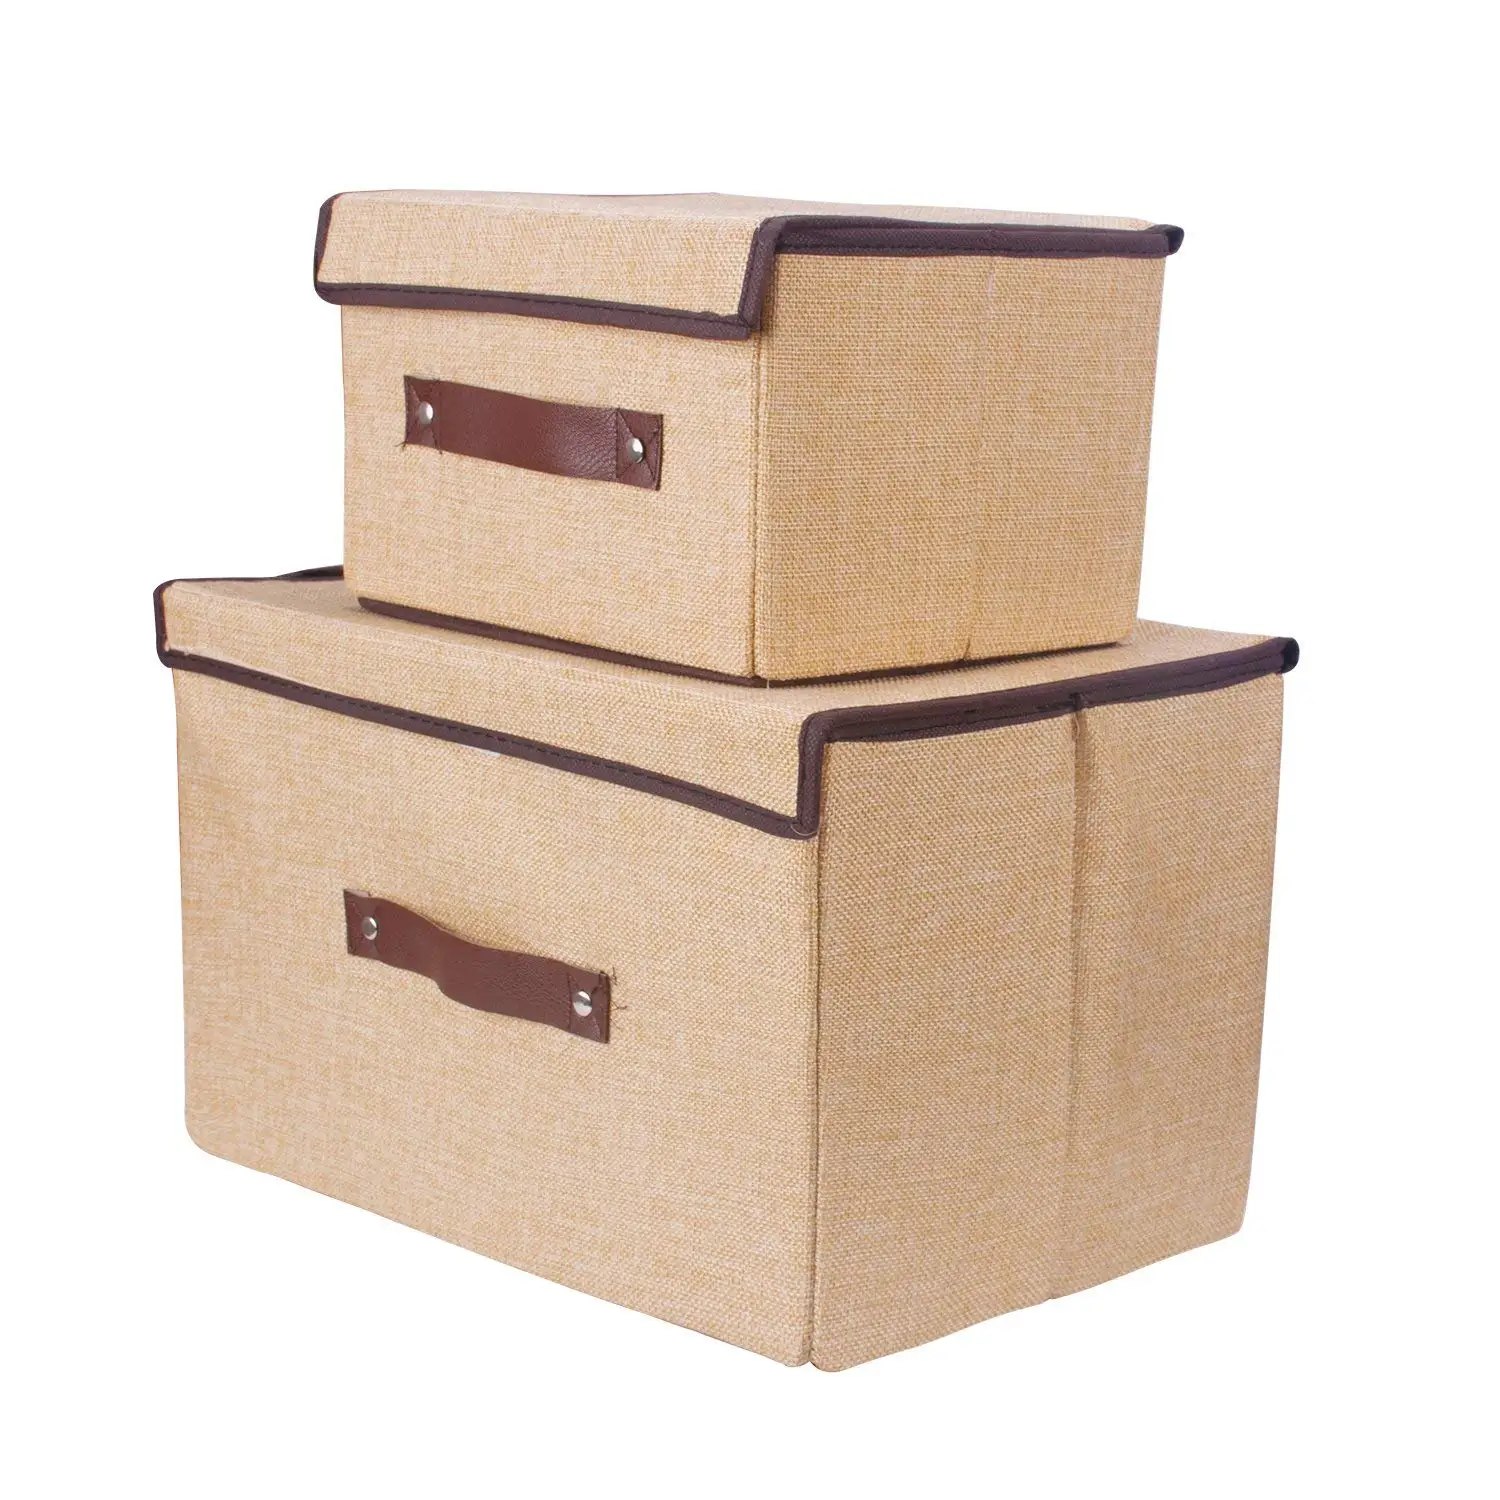 OEM decorative cardboard storage boxes with lid